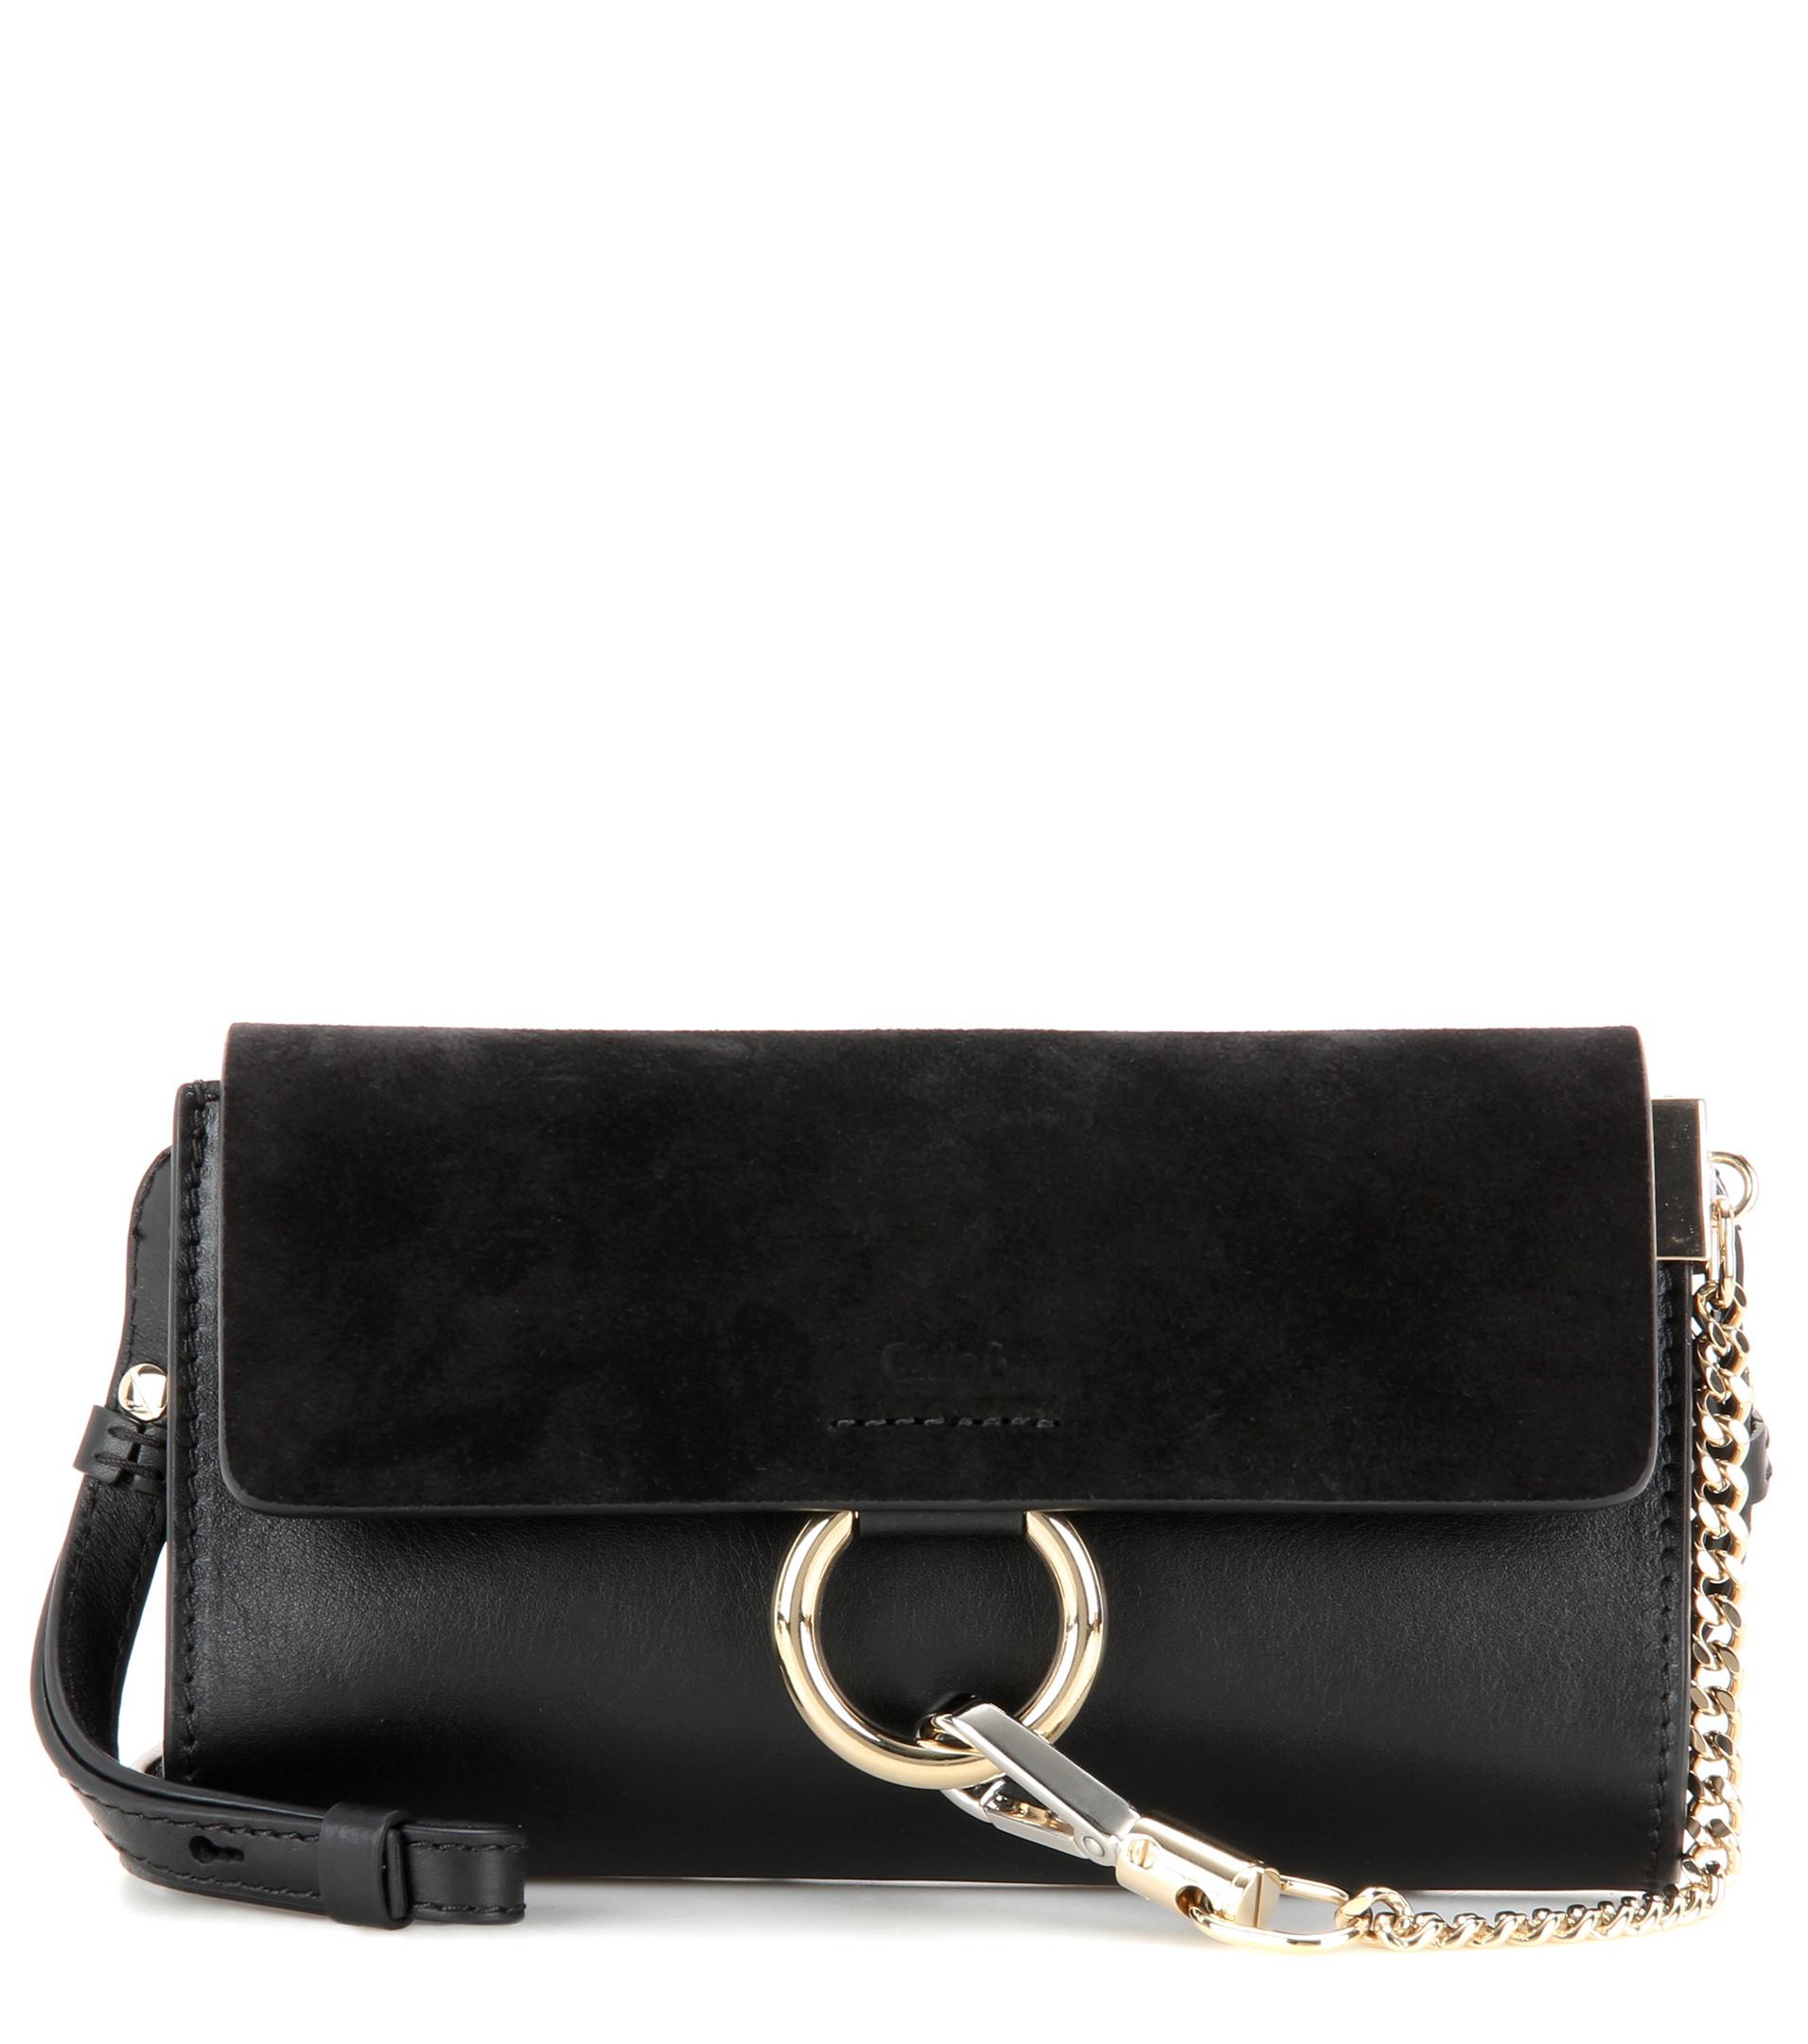 Lyst - Chloé Faye Mini Leather Wallet Bag in Black